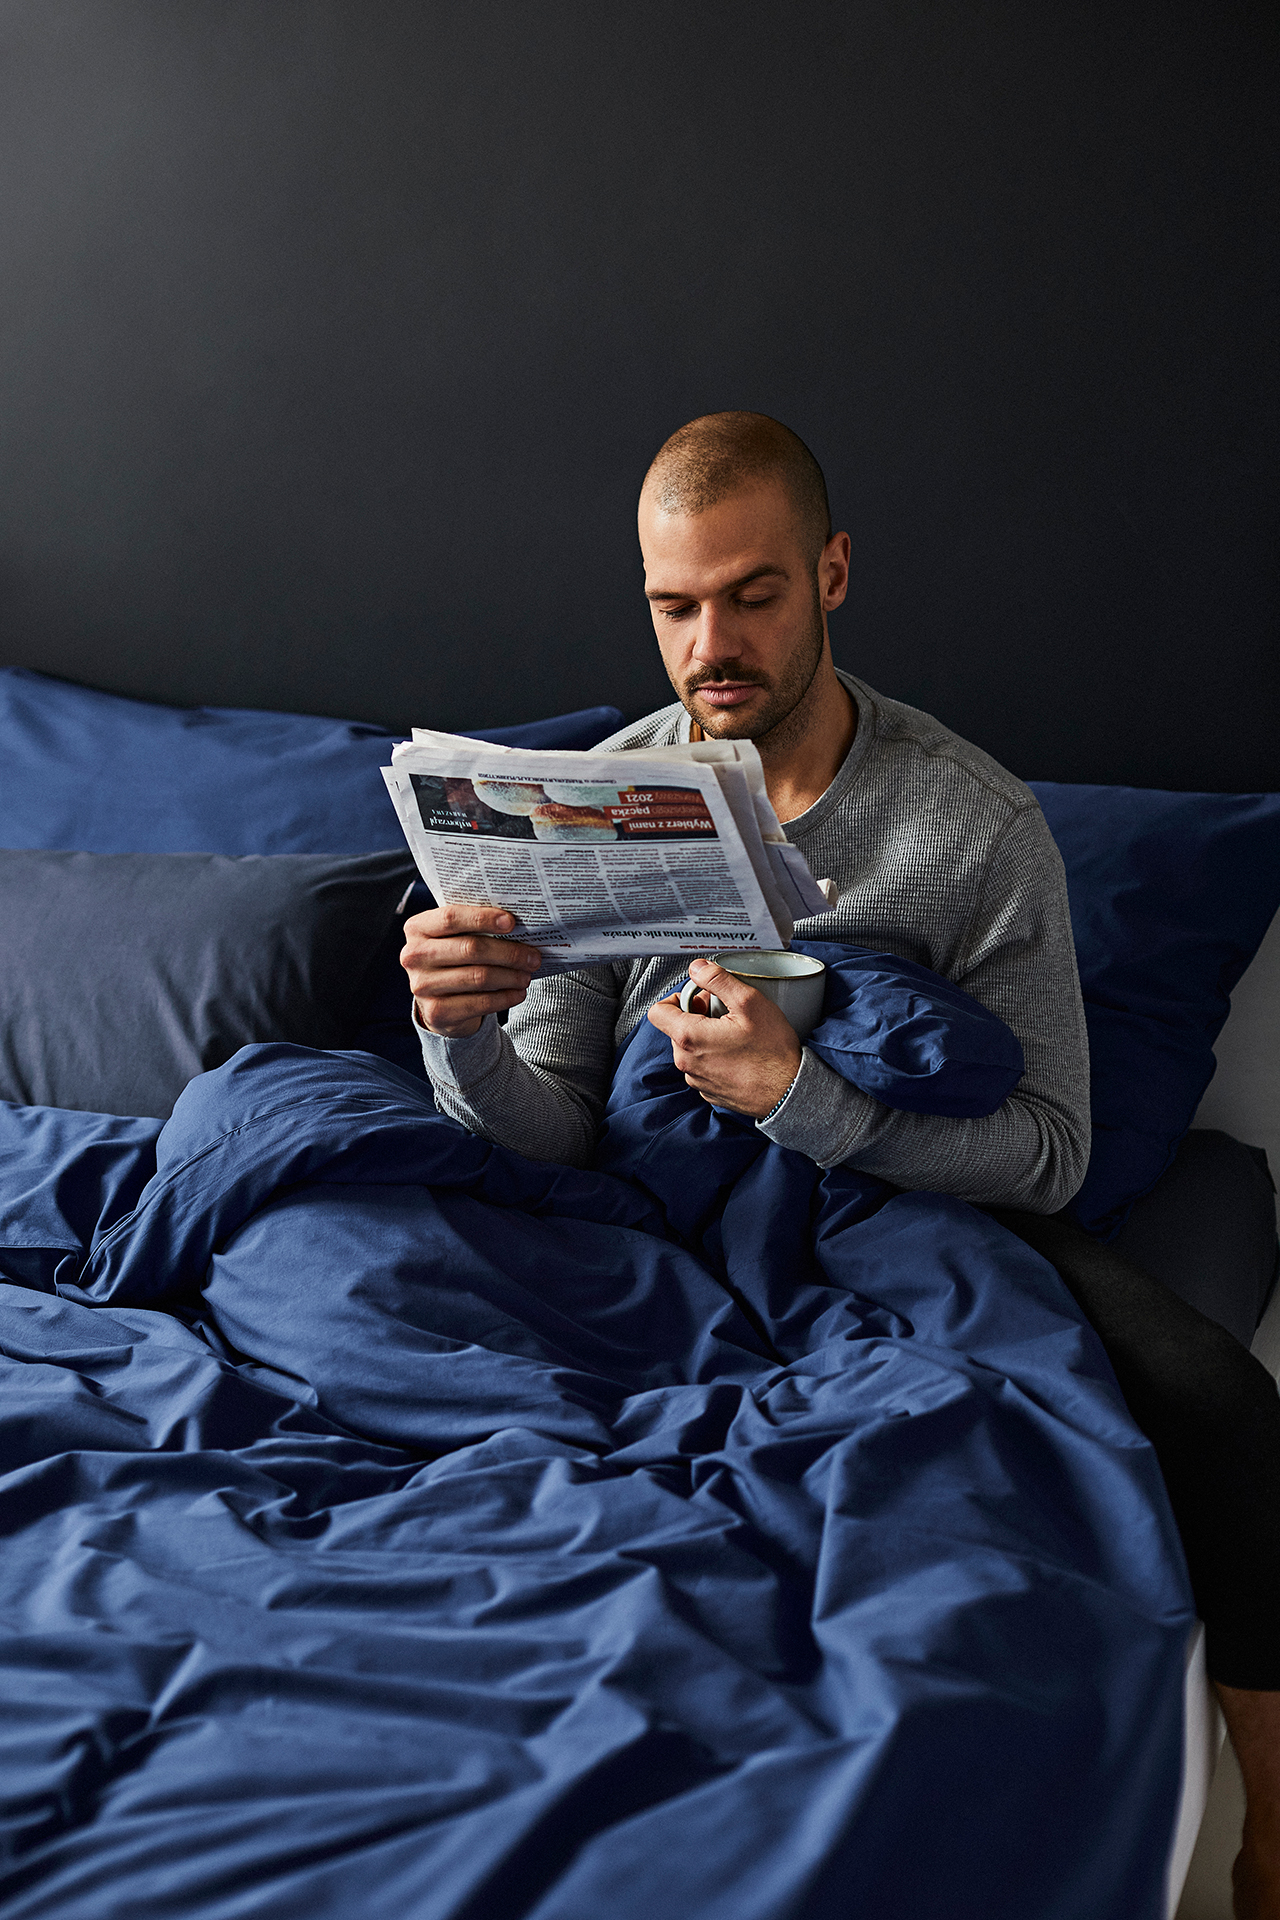 Chłopak na łóżku z gazetą